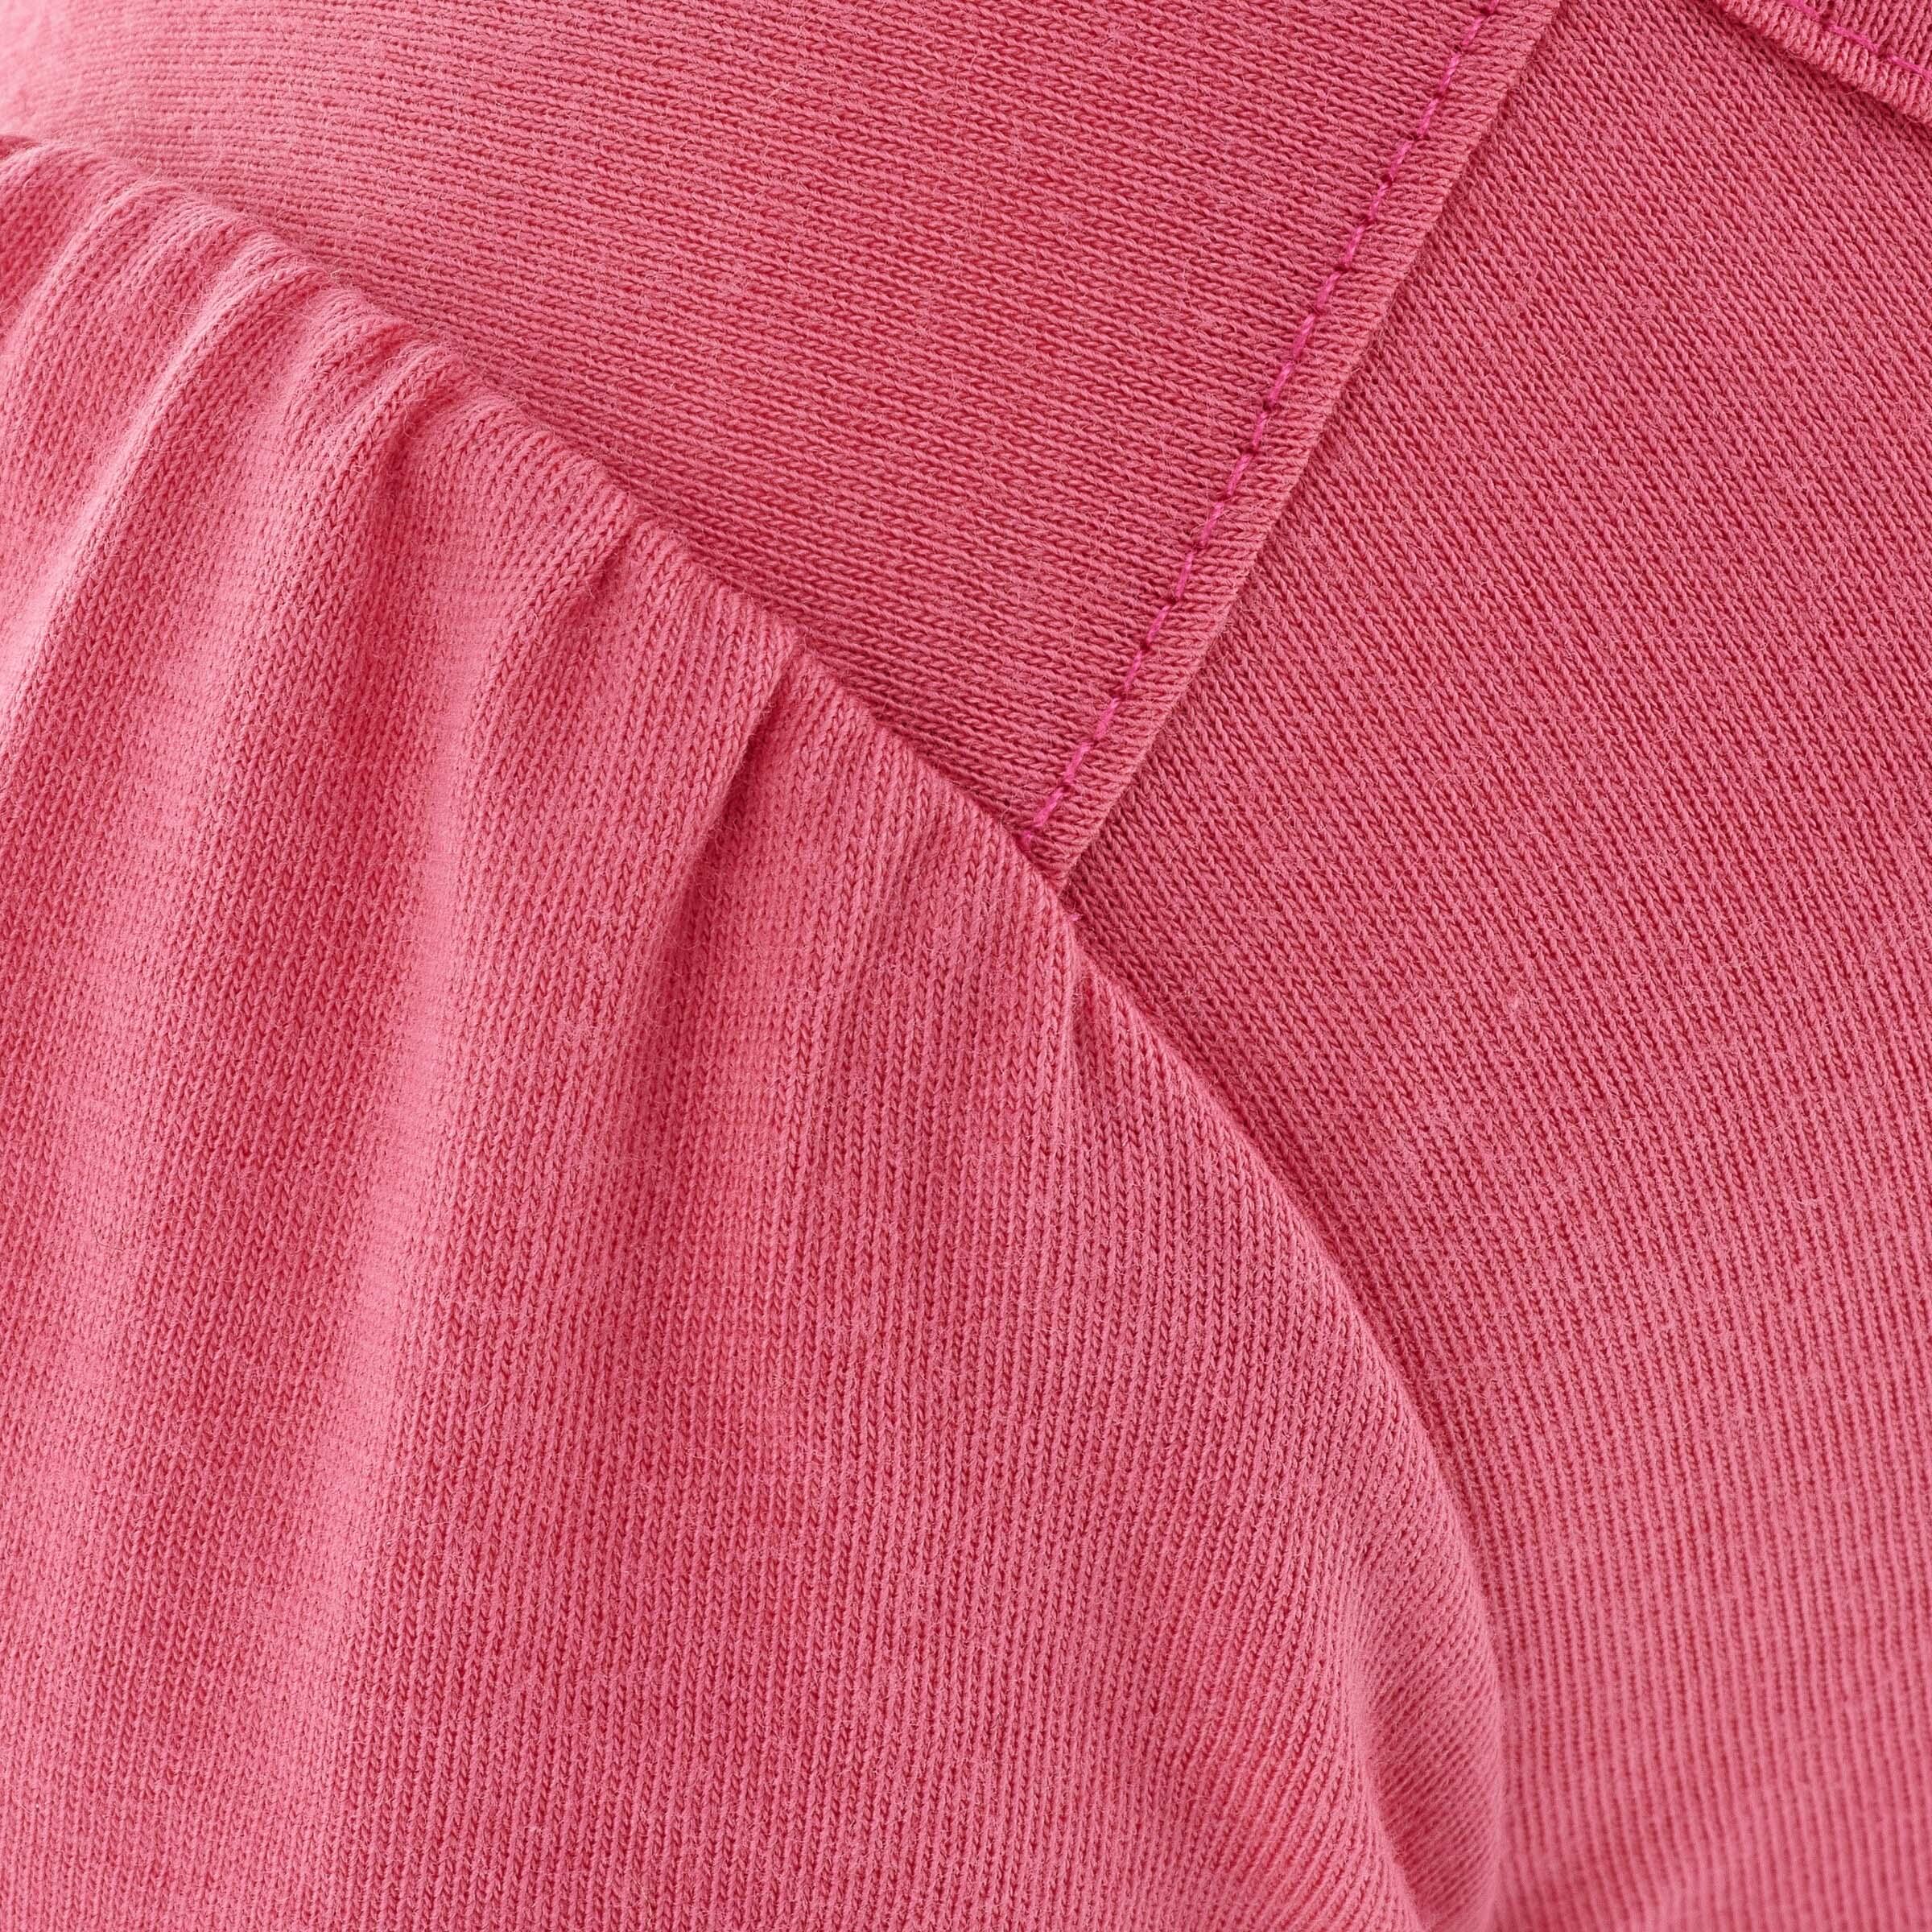 Babies' Hike 100 Hiking T-Shirt Pink 8/8